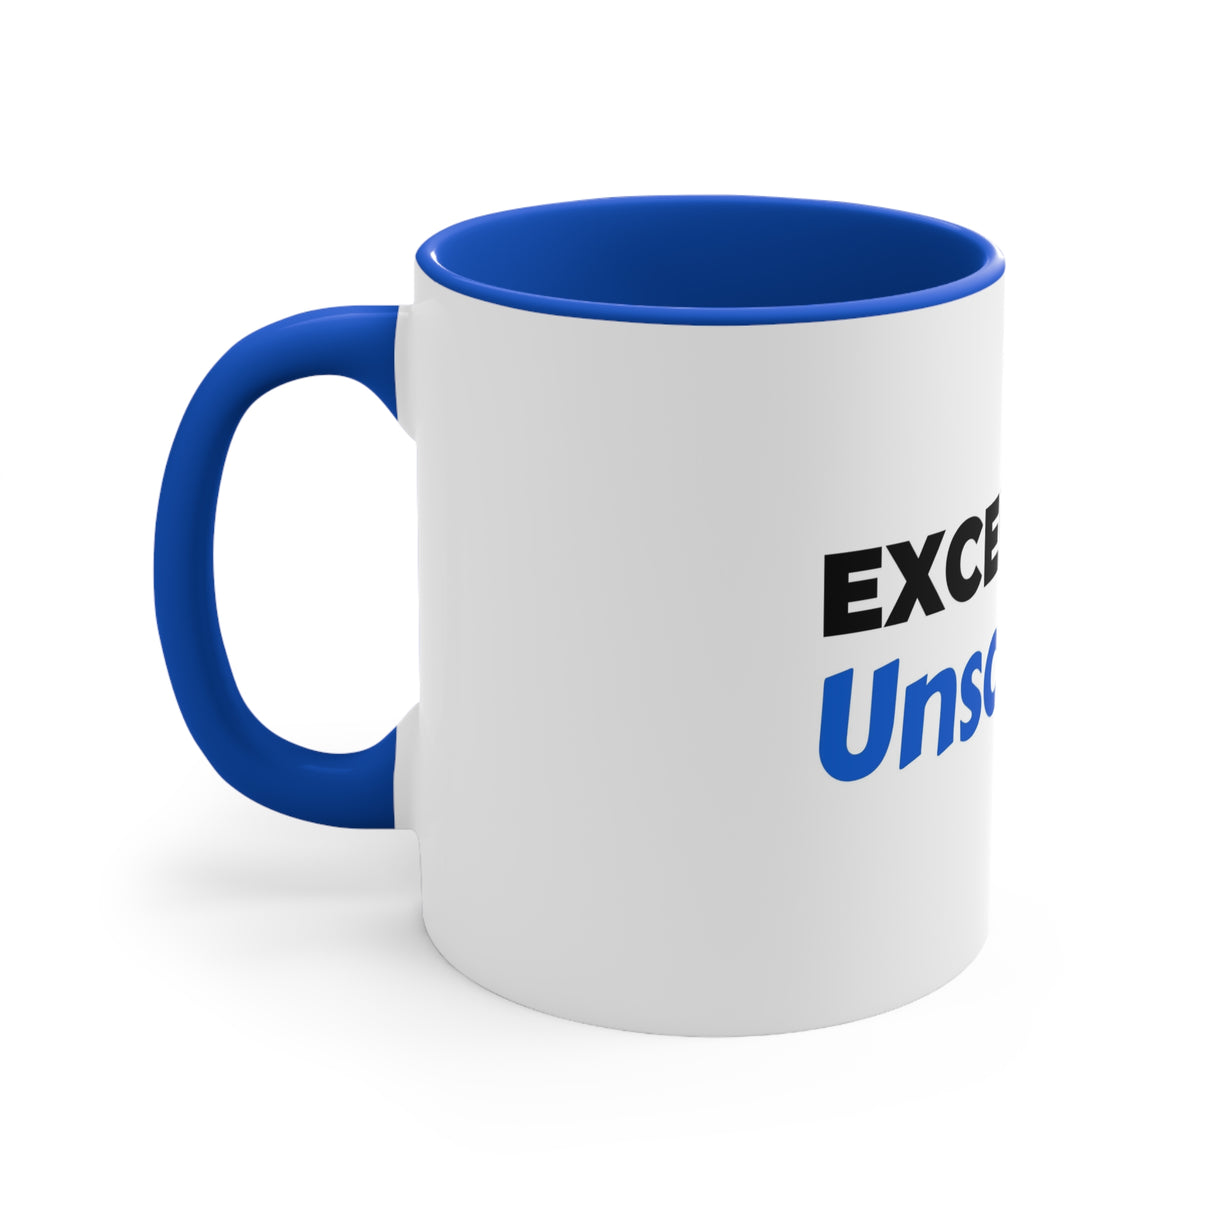 "Excellence Unscripted" 11oz Mug